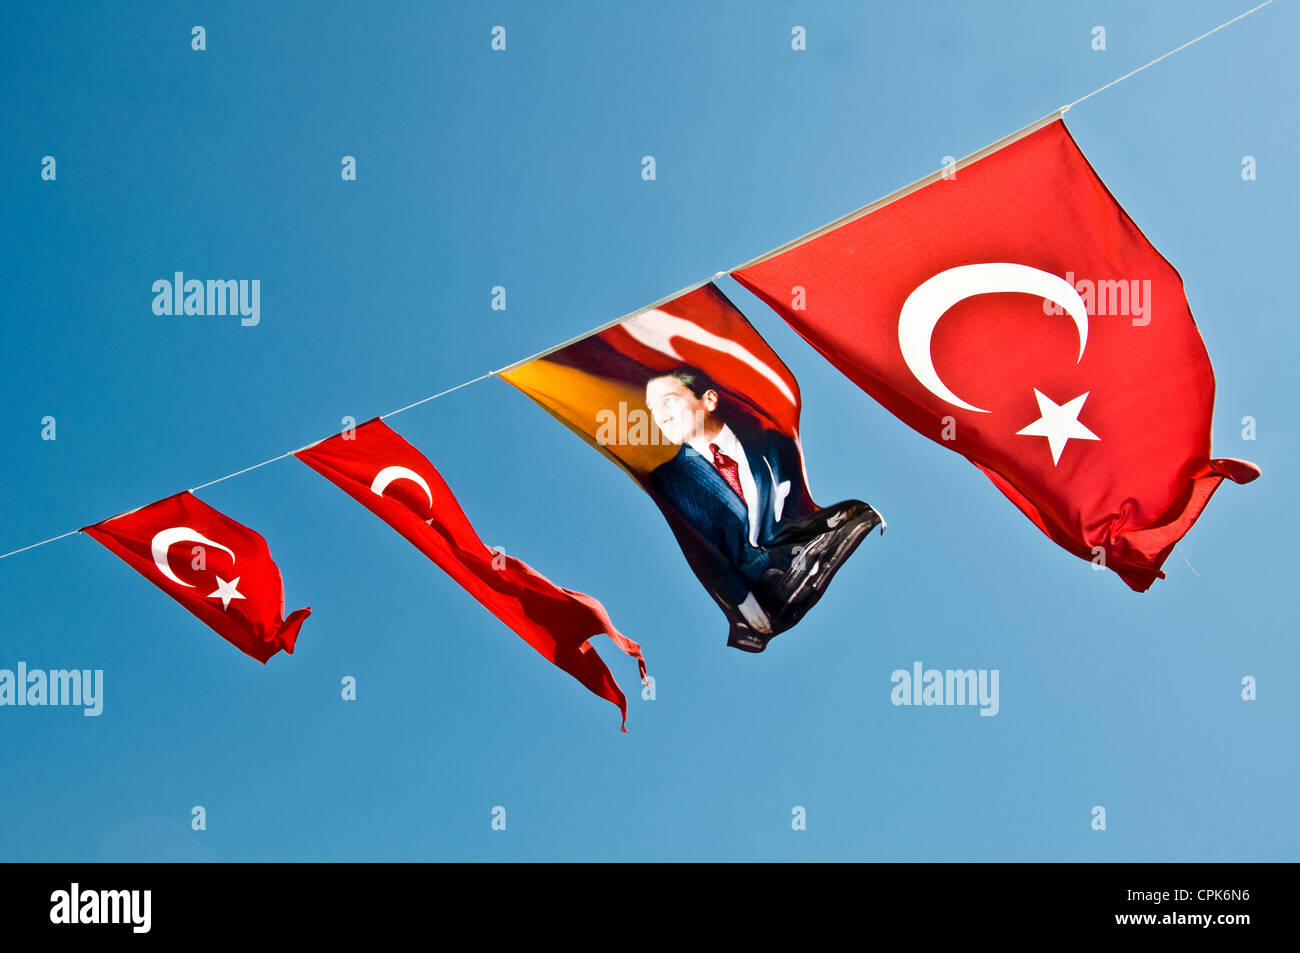 Four turkish flags against blue sky, one of them with a portrait of Mustafa Kemal Atatürk  - Istanbul, Turkey Stock Photo